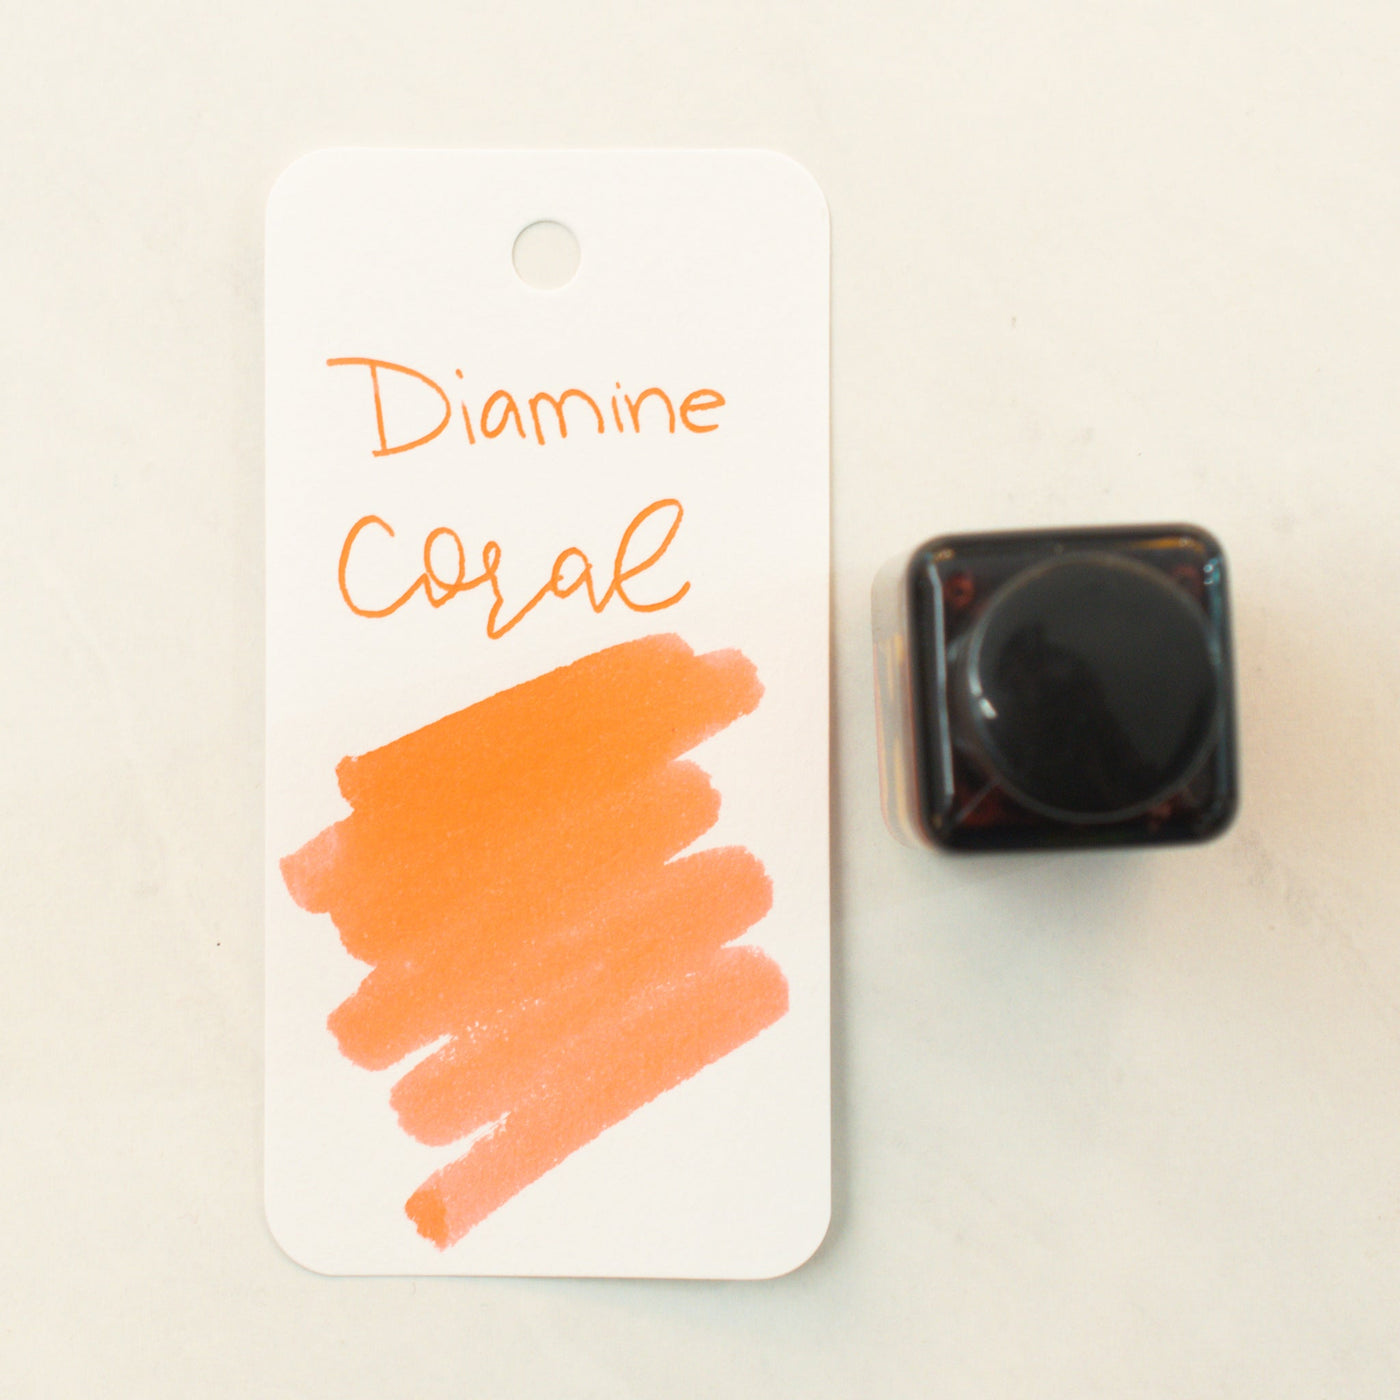 Diamine Coral Ink